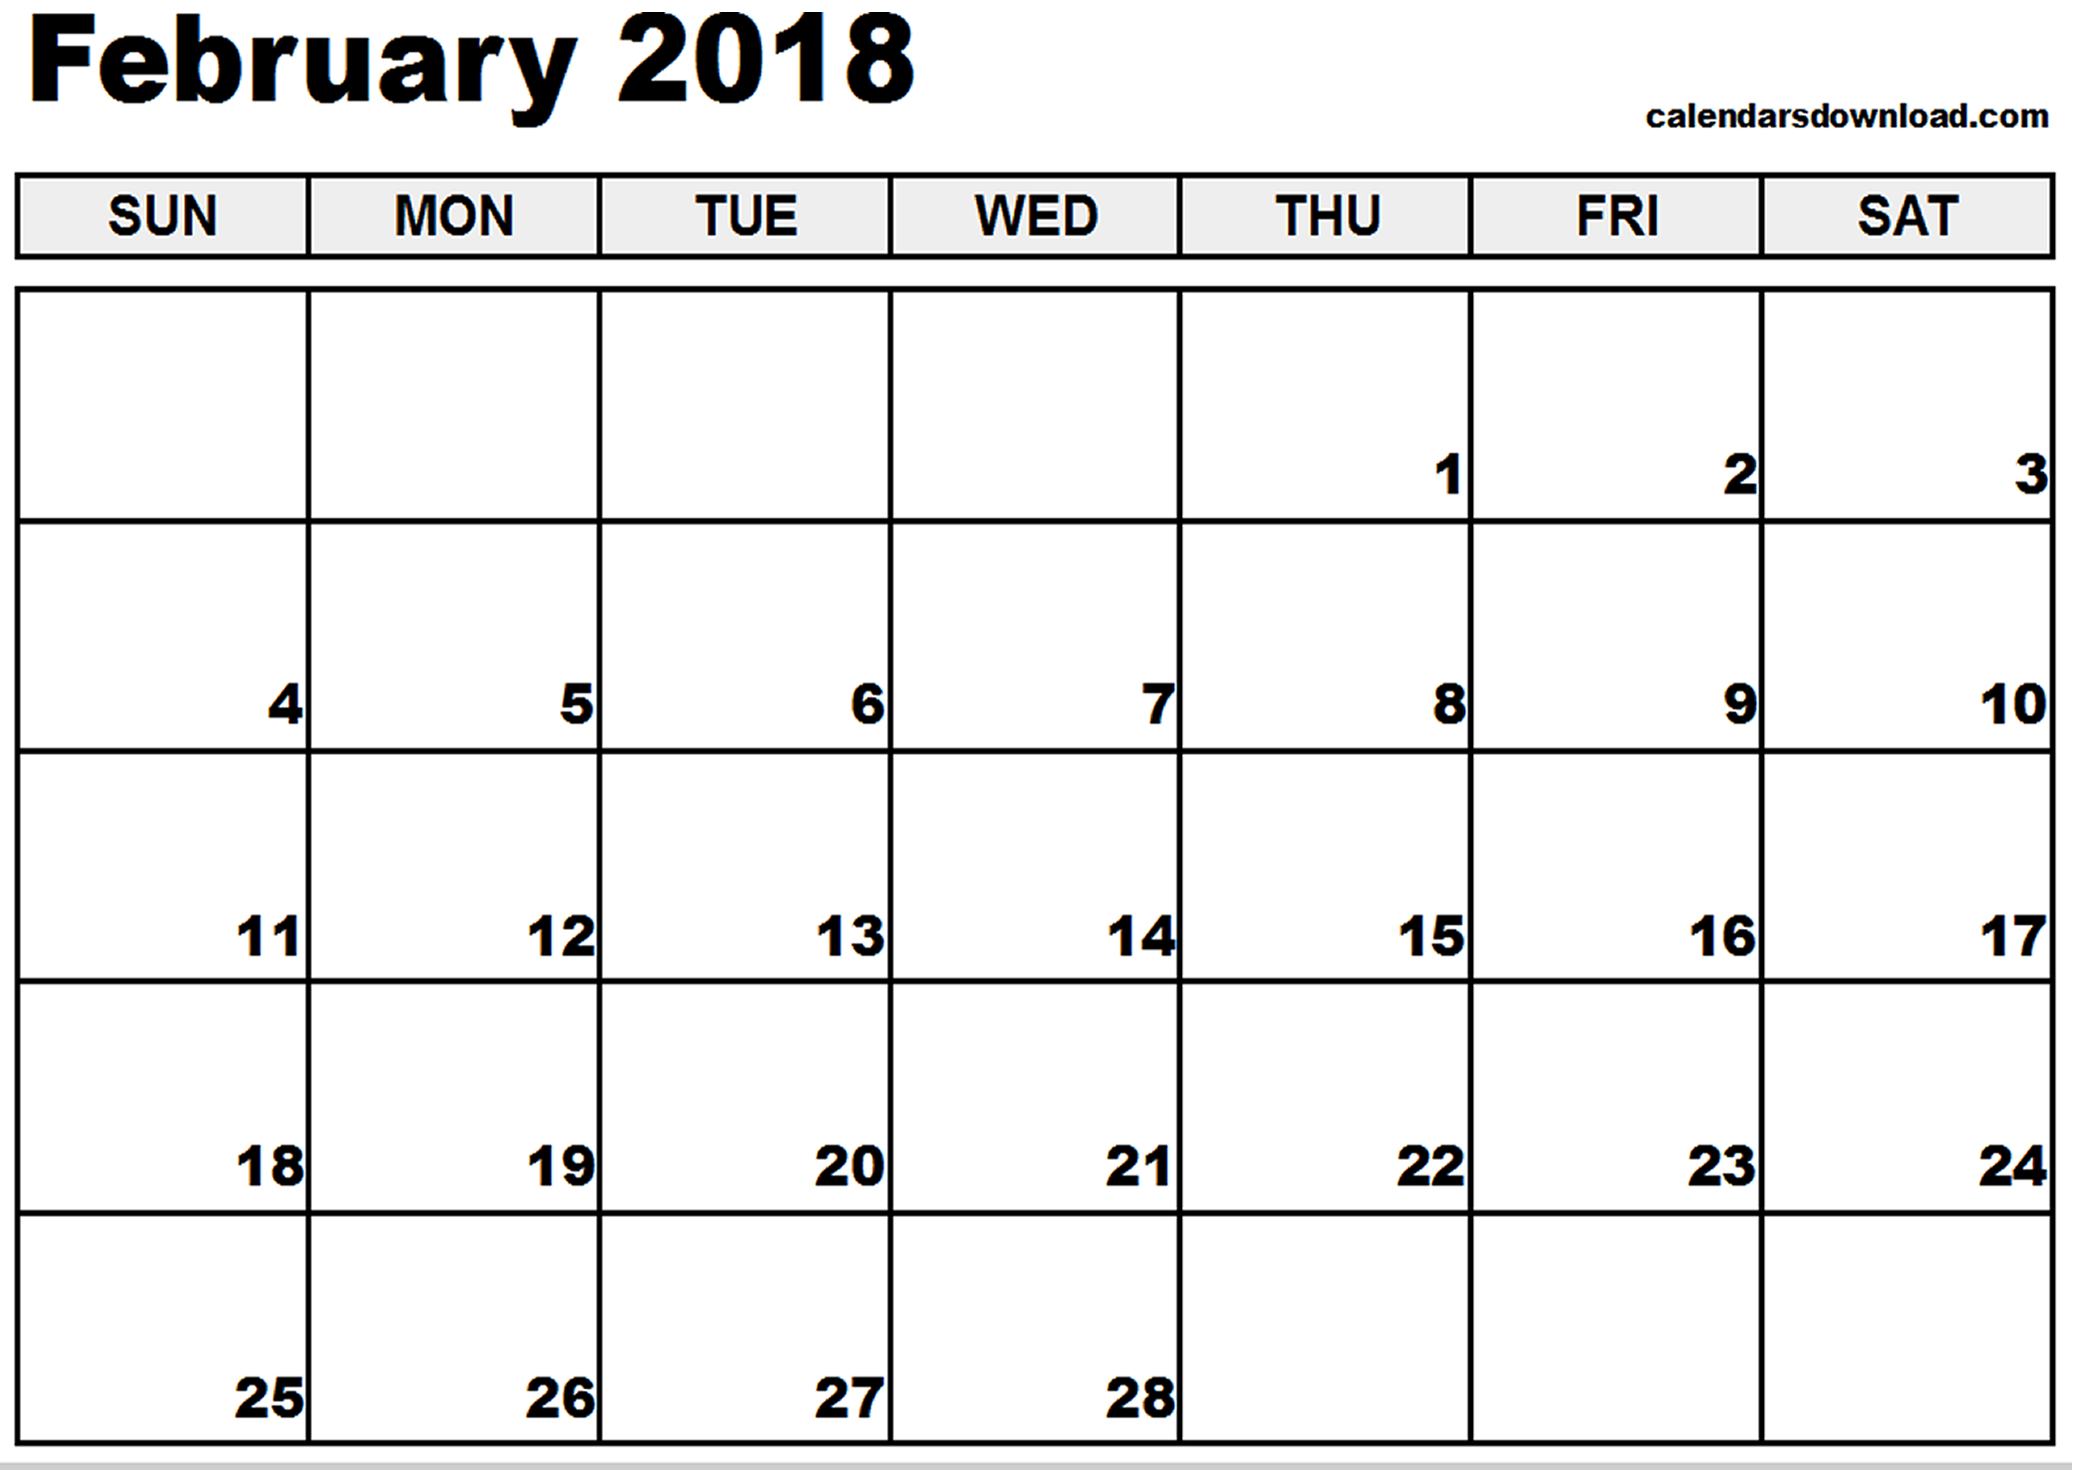 Download February 2018 calendar printable